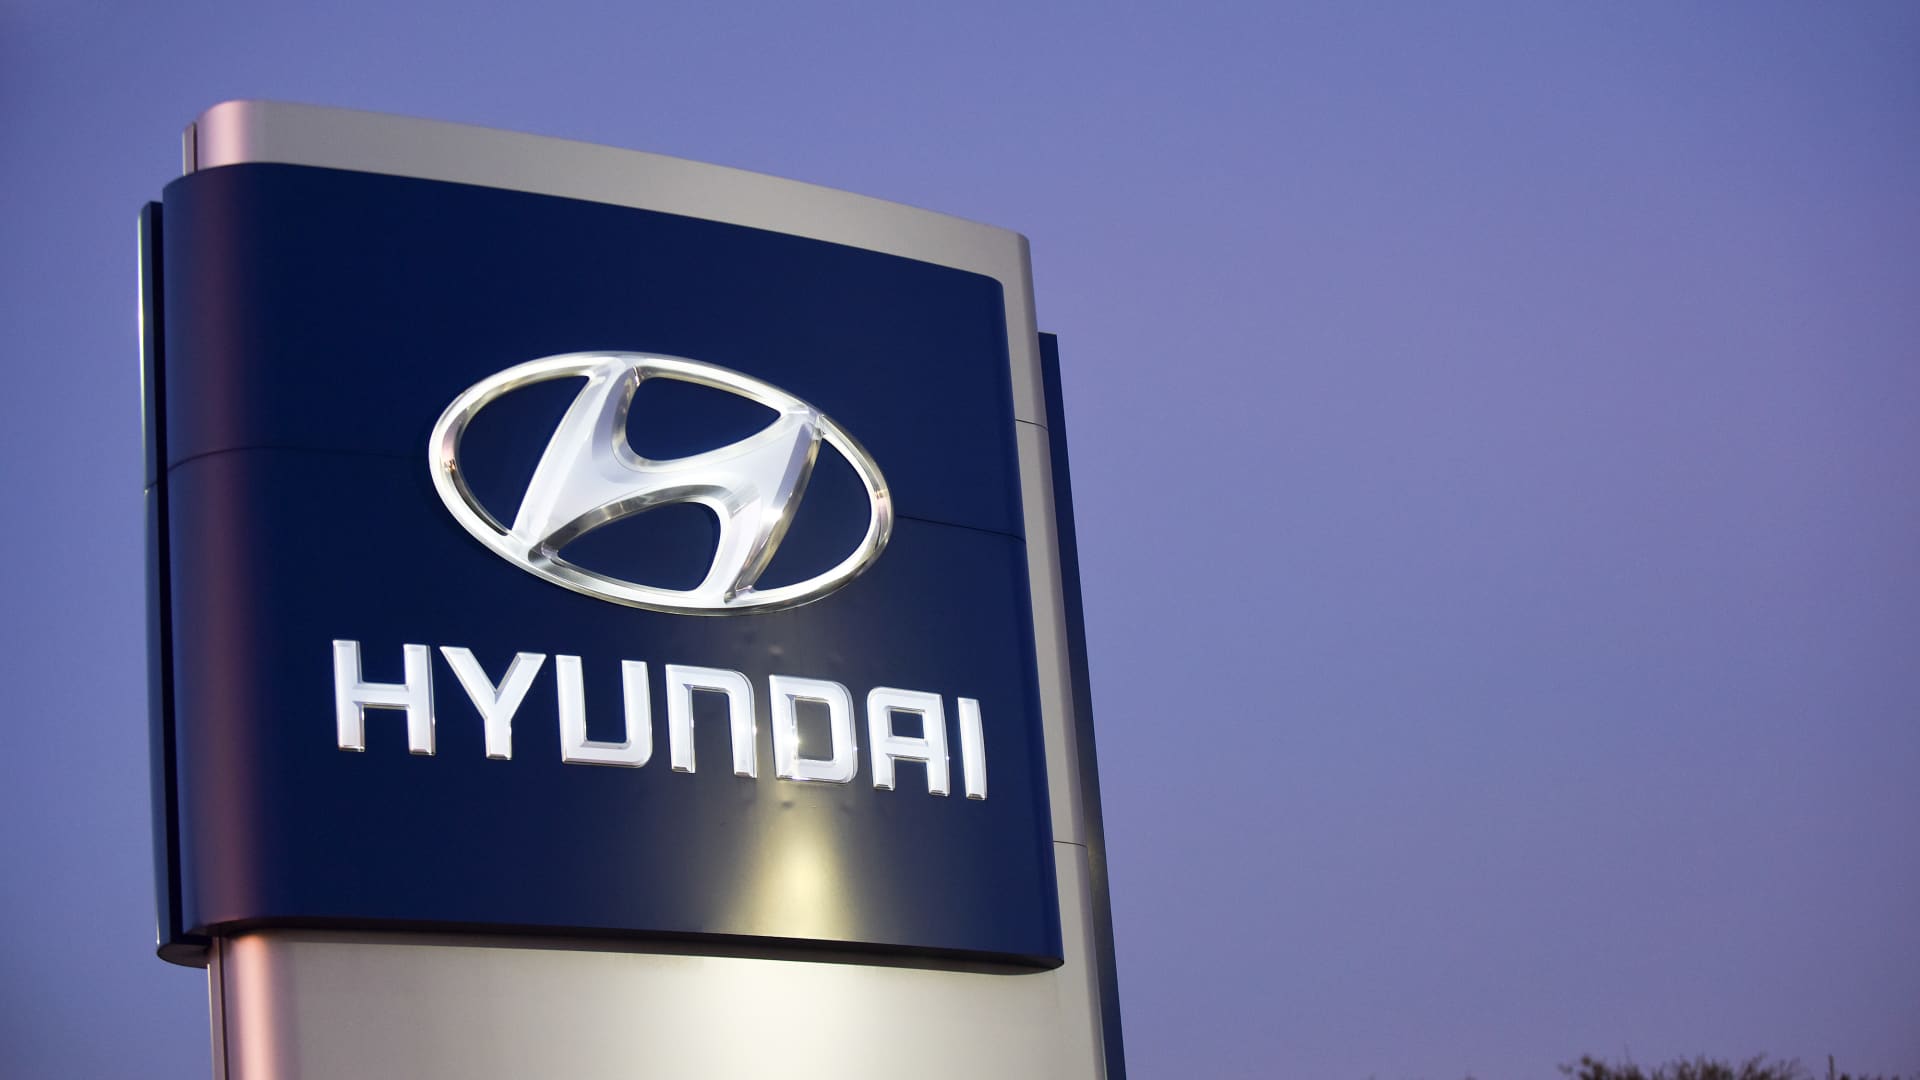 Hyundai has put the focus on brand name pronunciation in its latest U.K. TV advert.